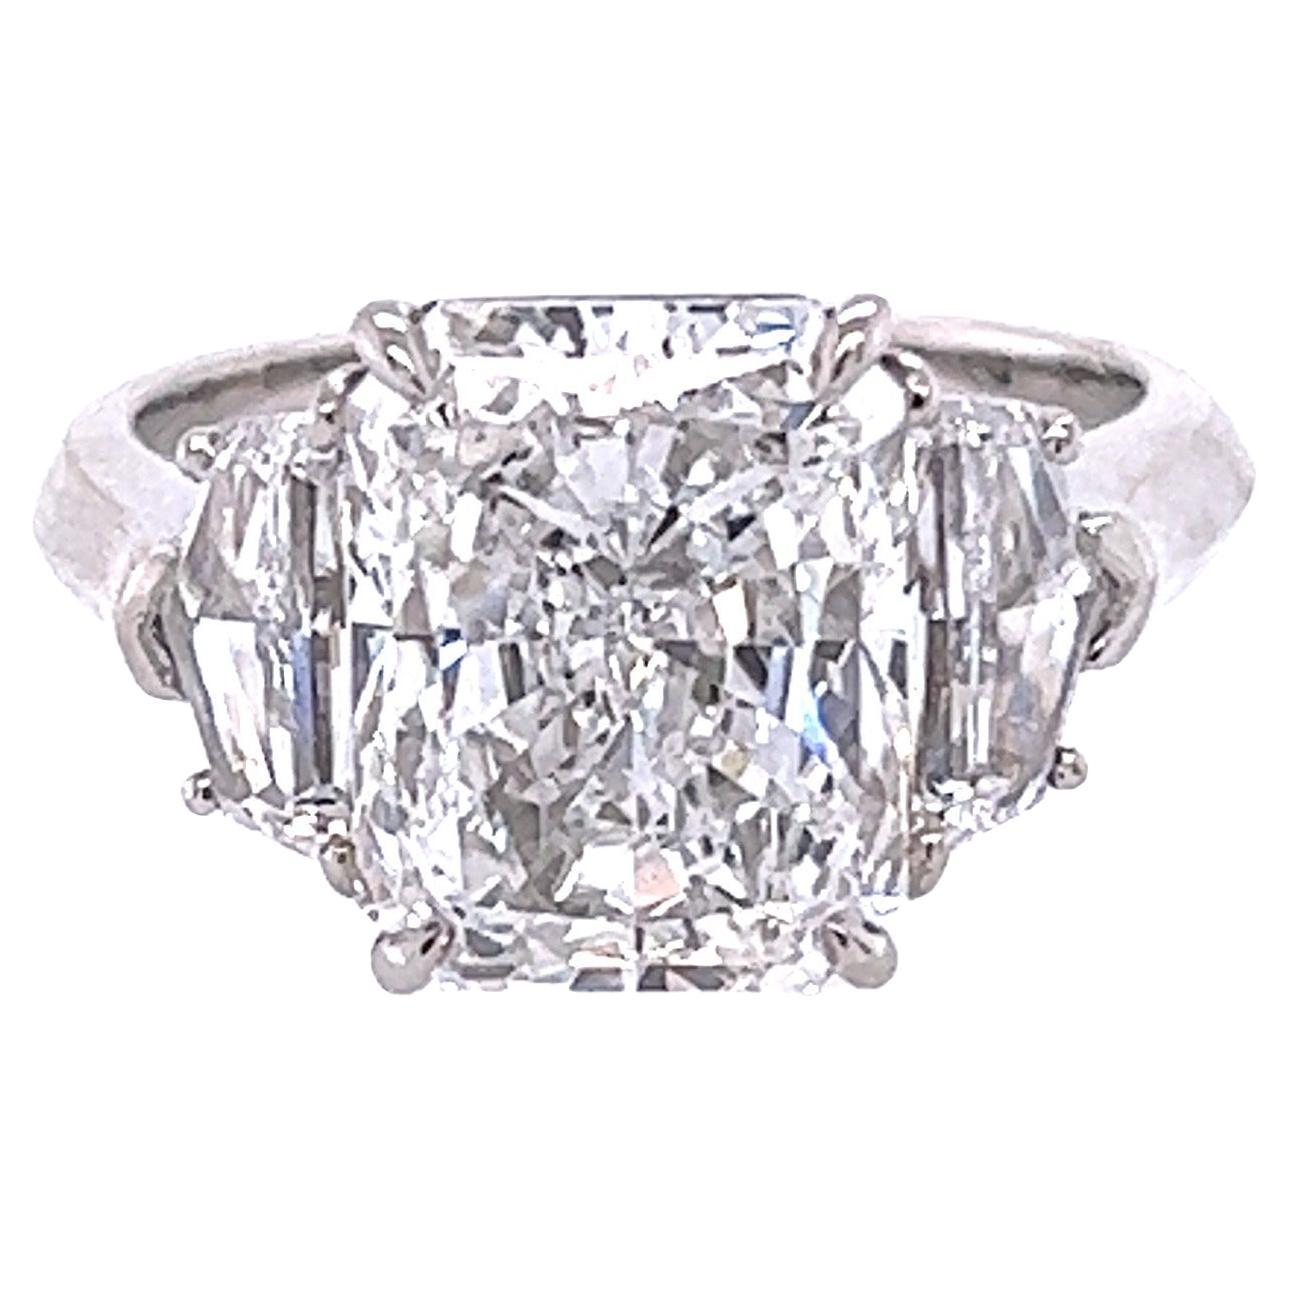 David Rosenberg 5.01 Carat Radiant Cut F SI1 GIA Diamond Engagement Ring For Sale